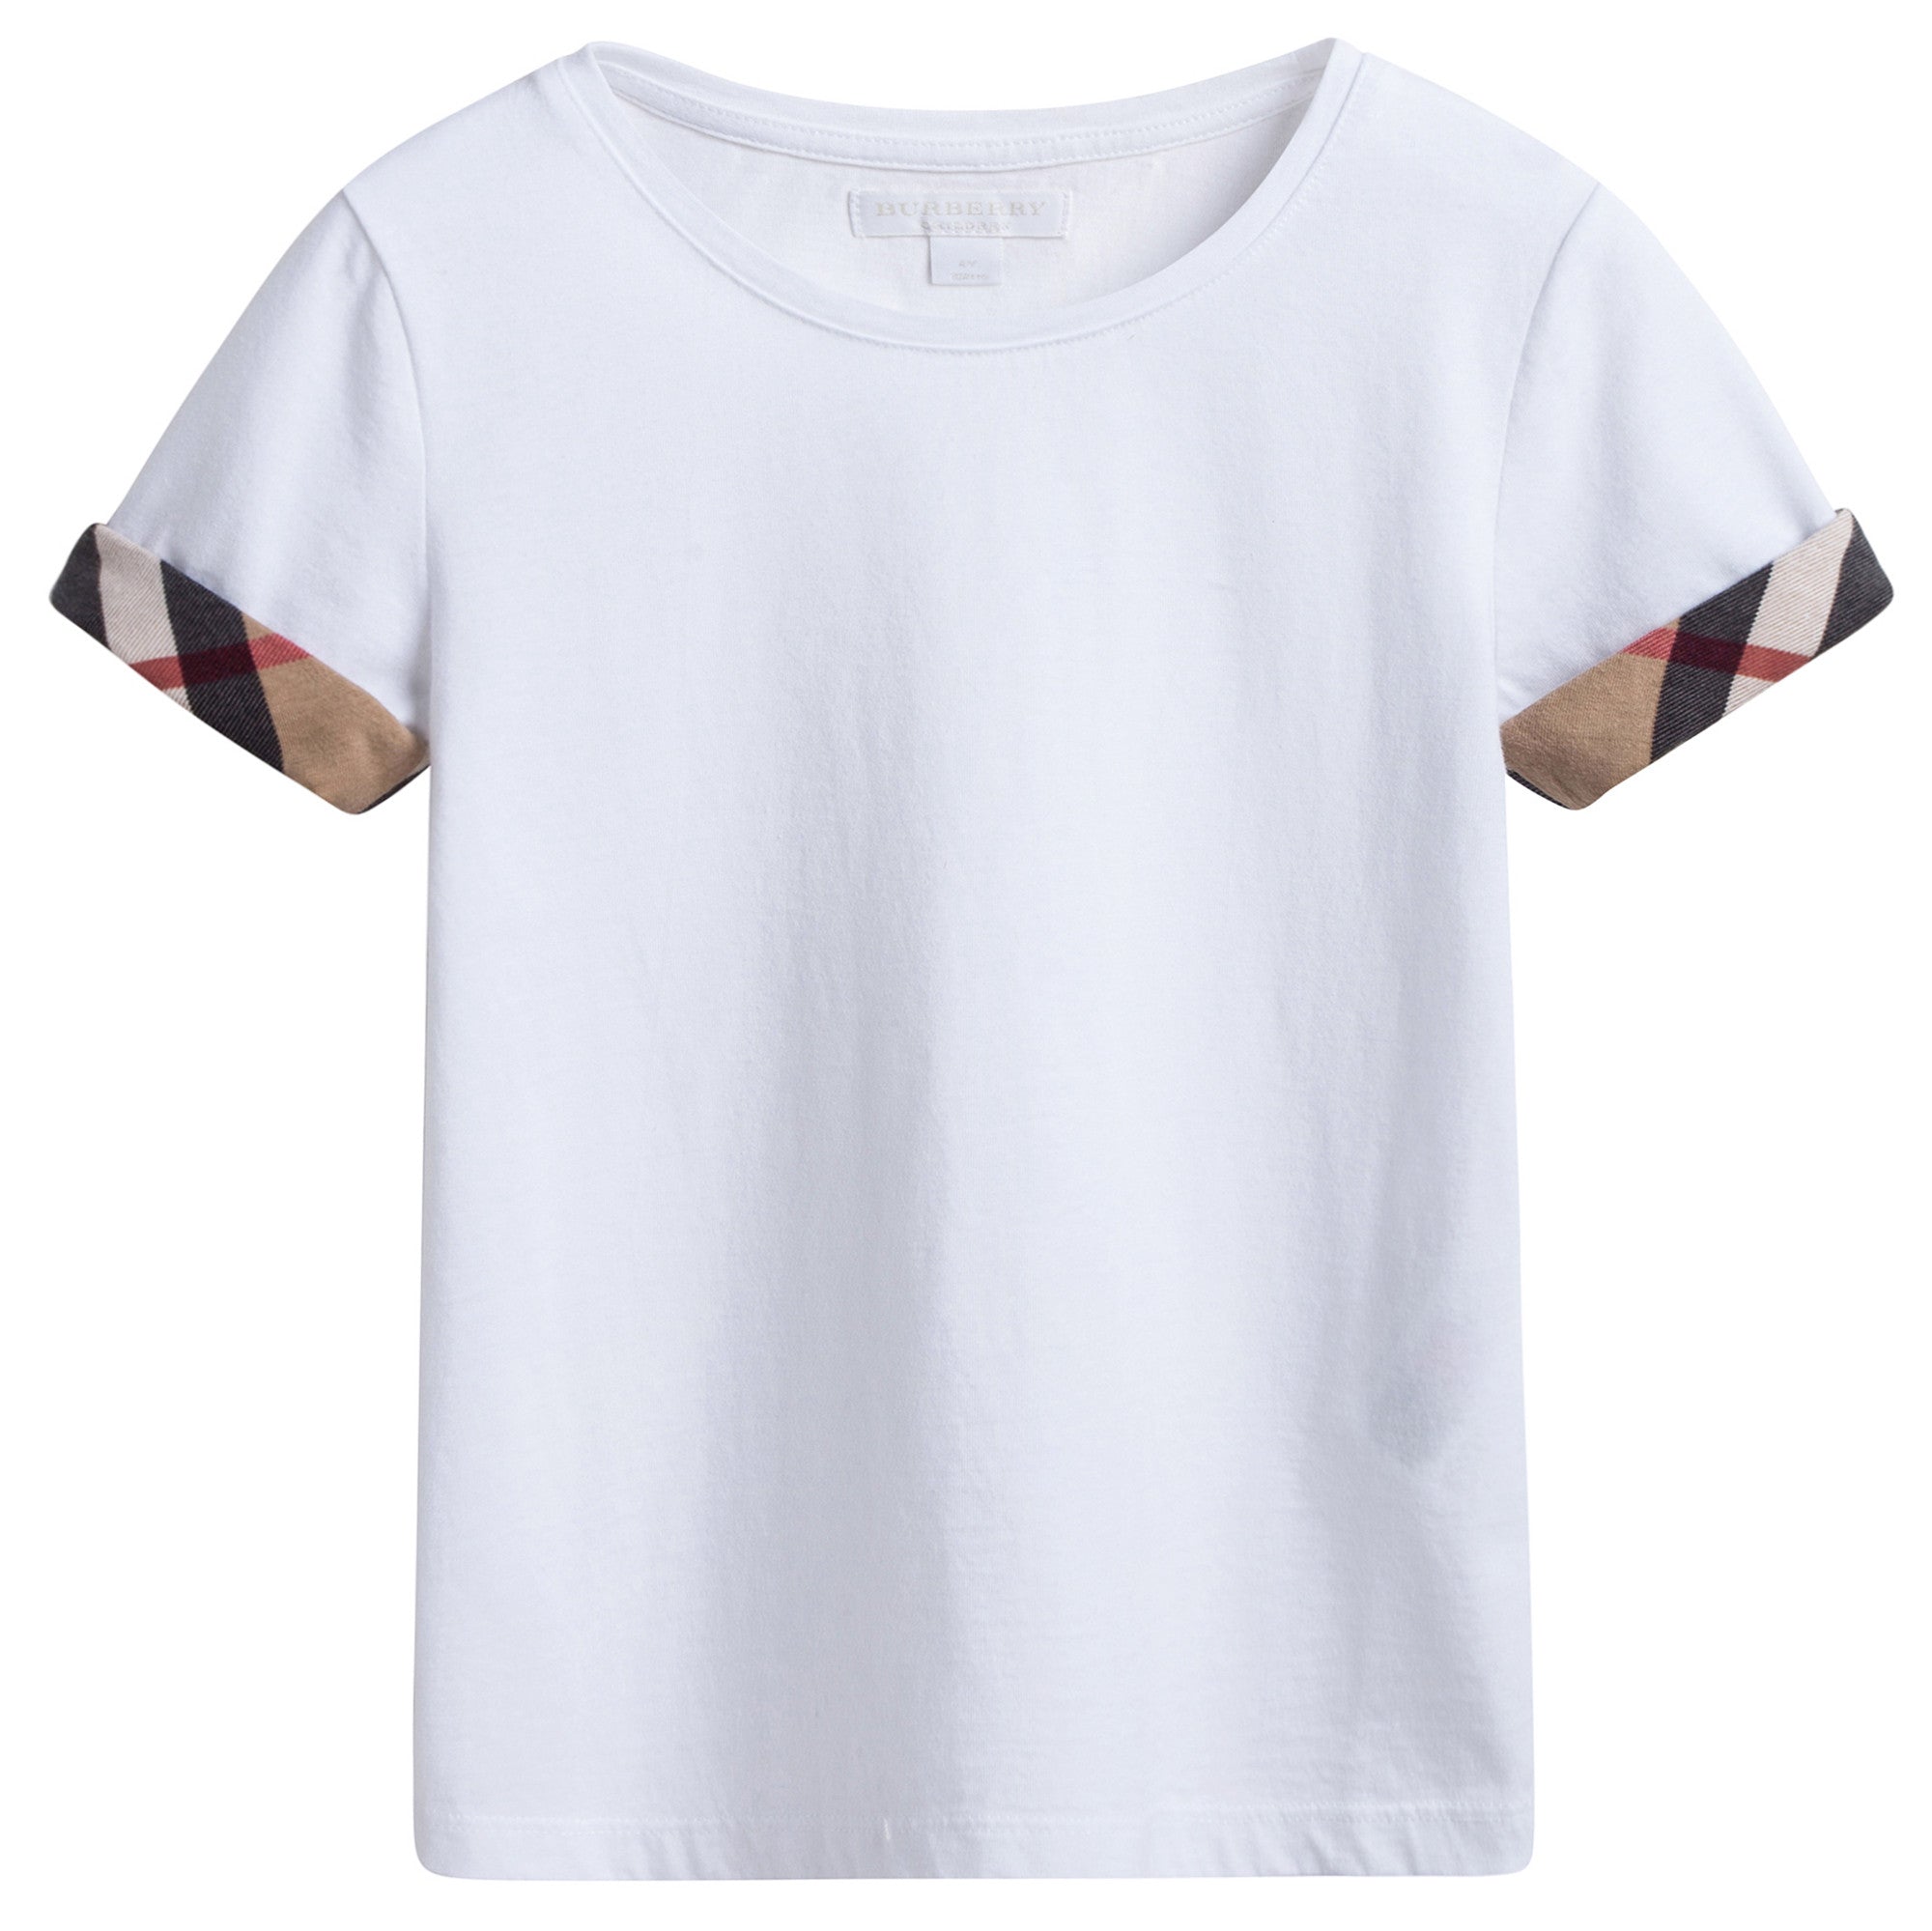 Girls White Cotton T-shirt With Check Trim